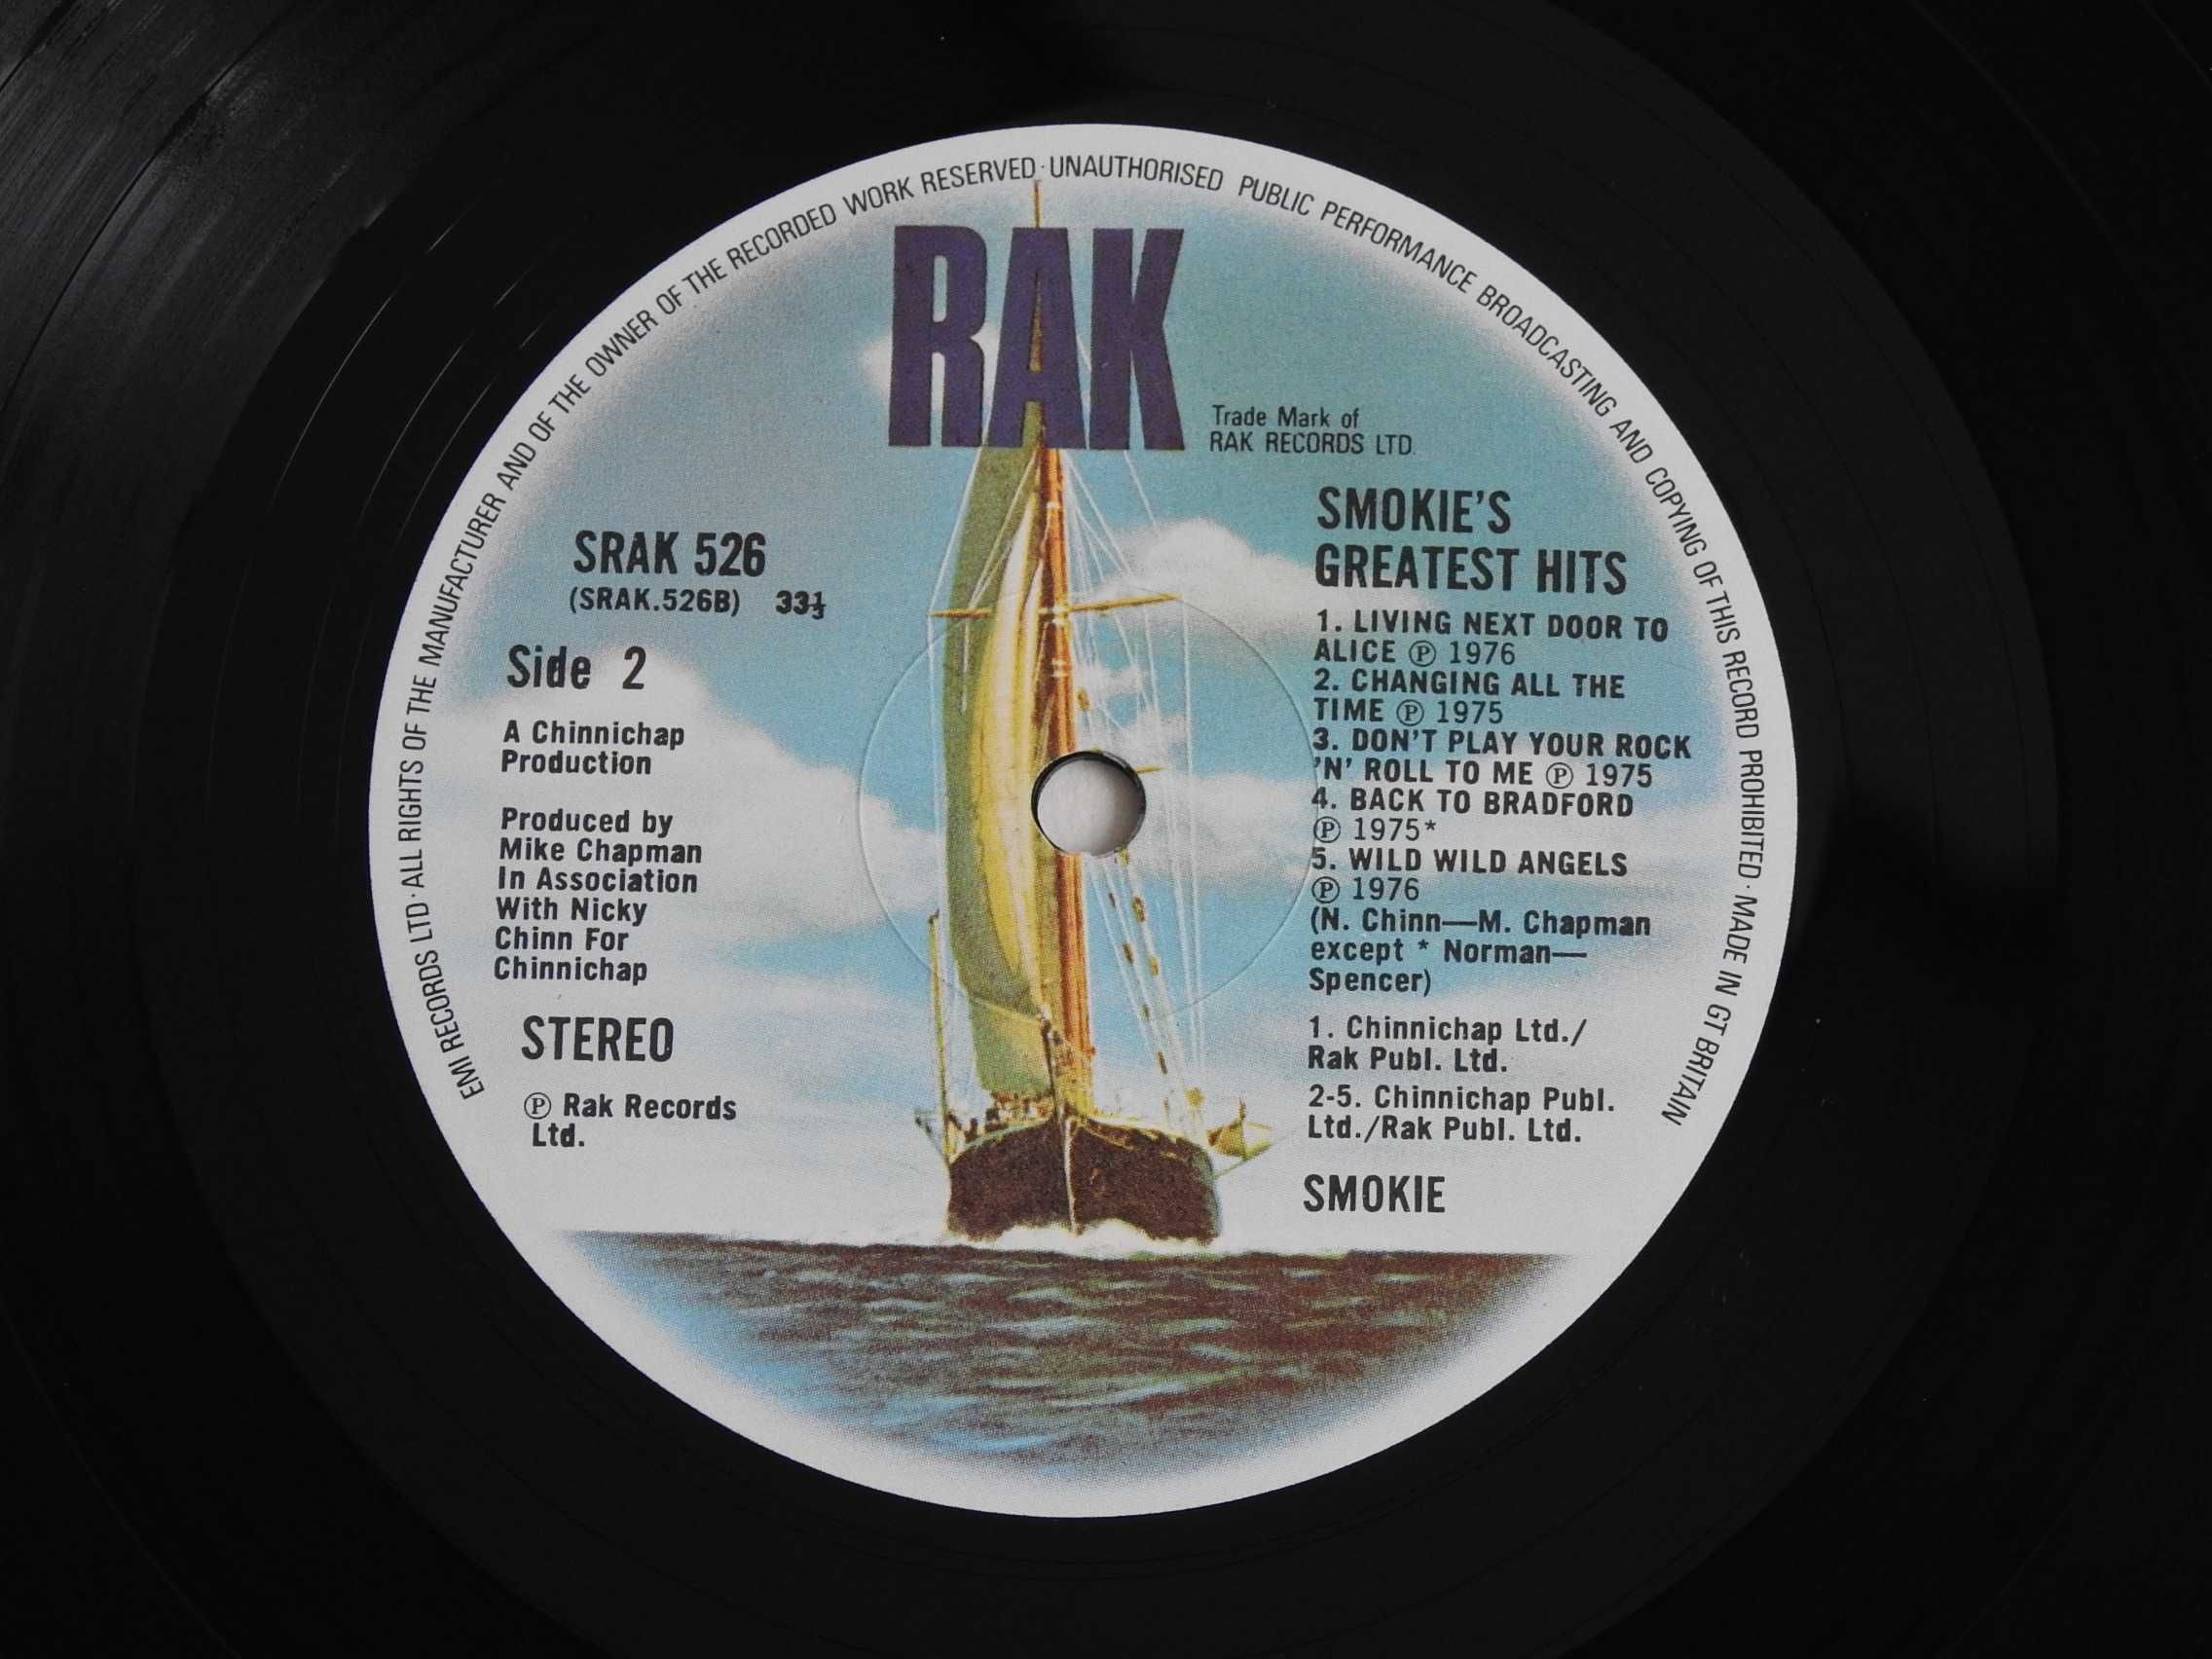 Smokie ‎Greatest Hits LP UK 1977 пластинка Британия 1 press M оригинал